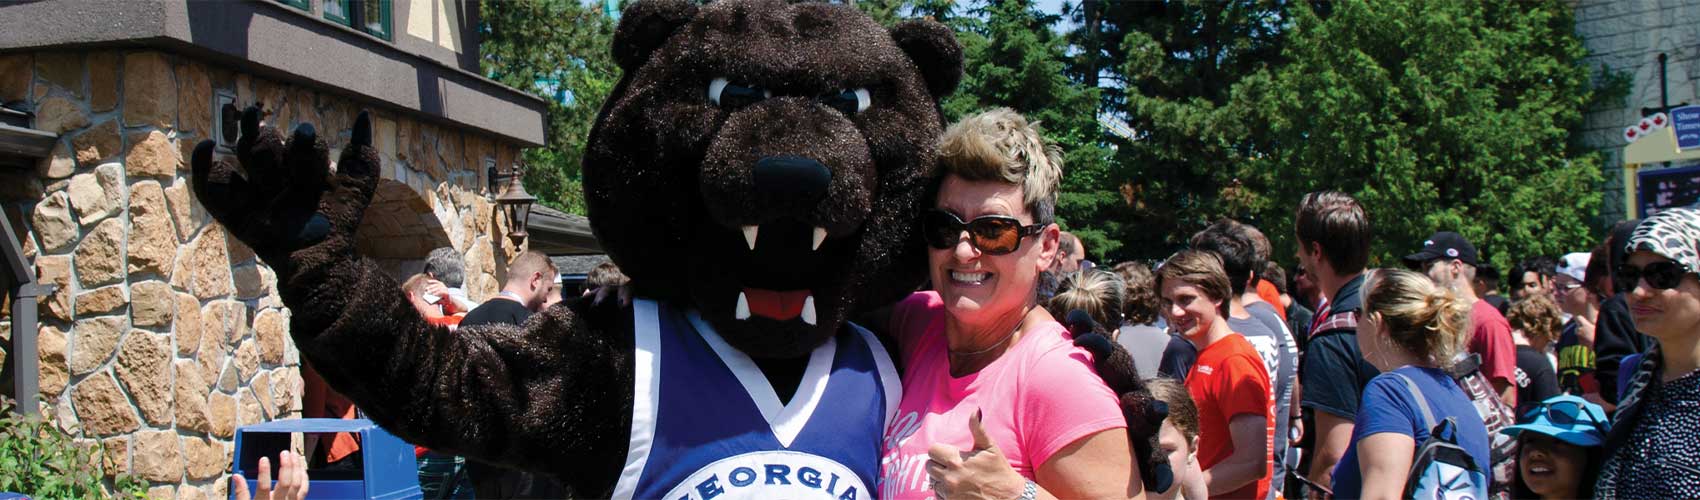 Growler, Georgian's grizzly bear mascot, standing next to an alumni during Georgian Day at Canada's Wonderland